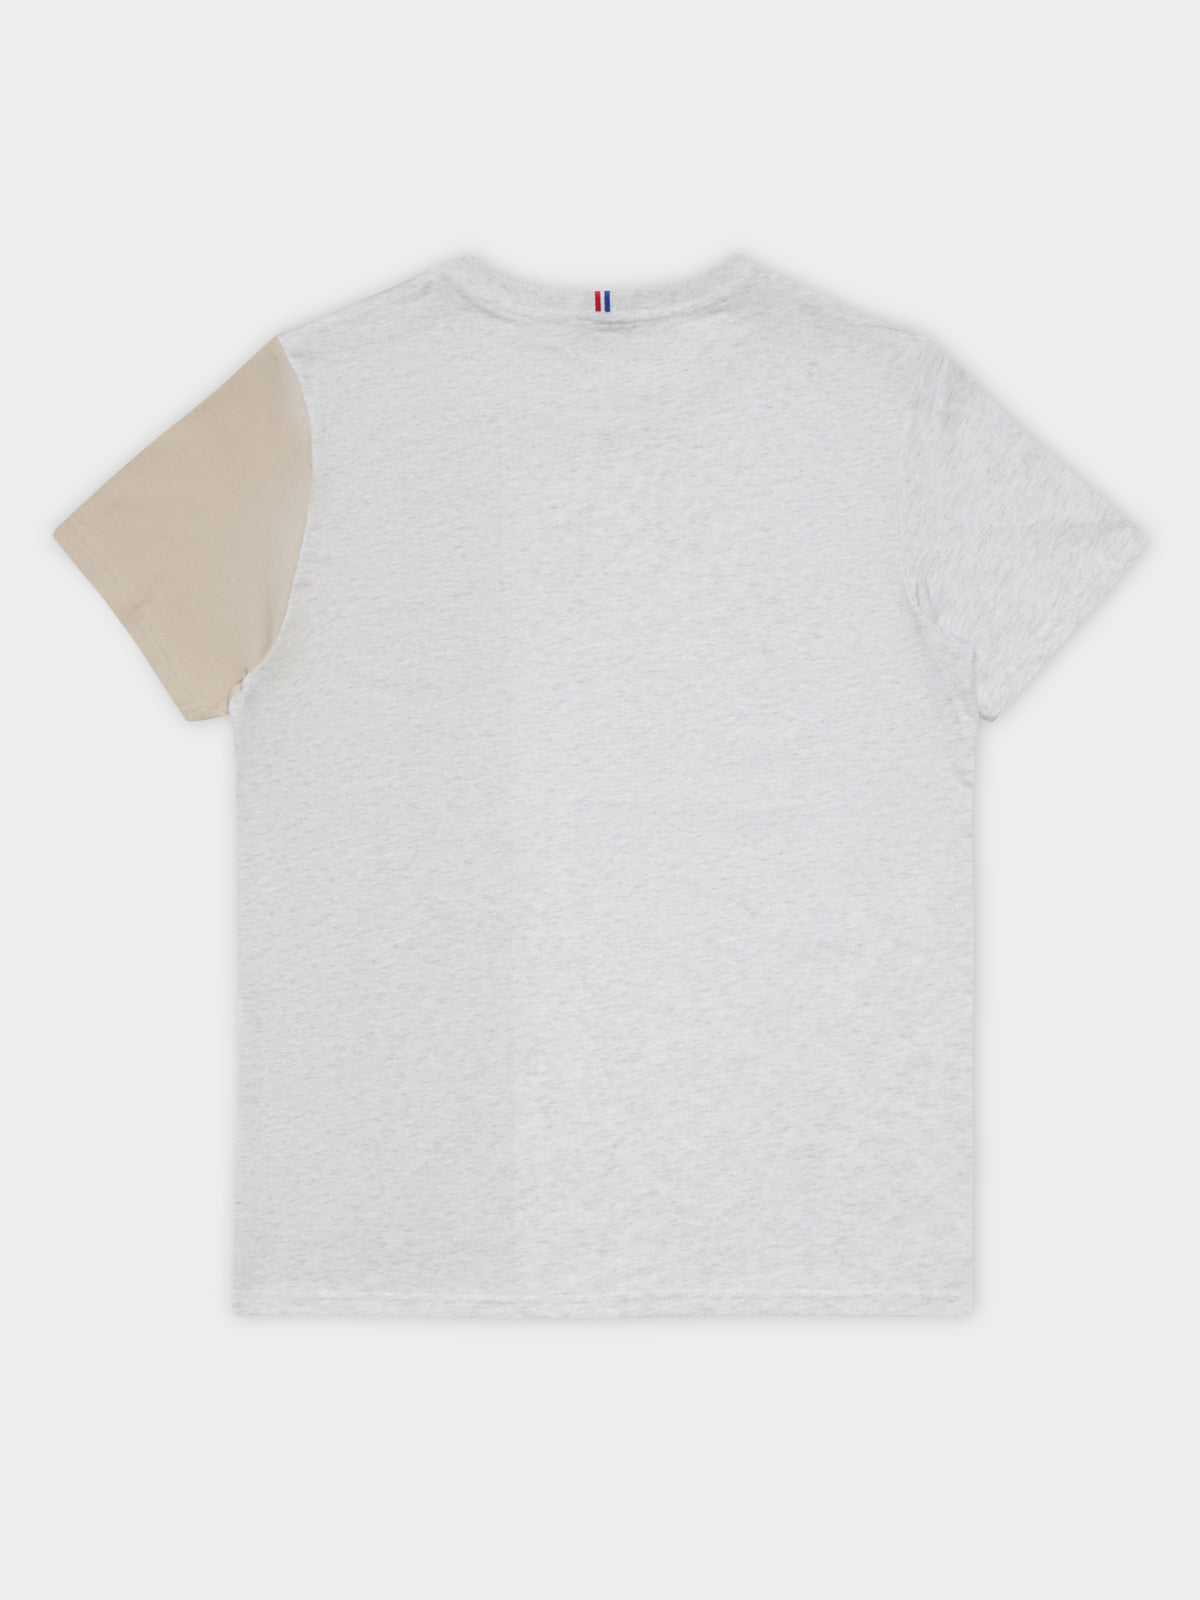 Monaco T-Shirt in Snow Marle